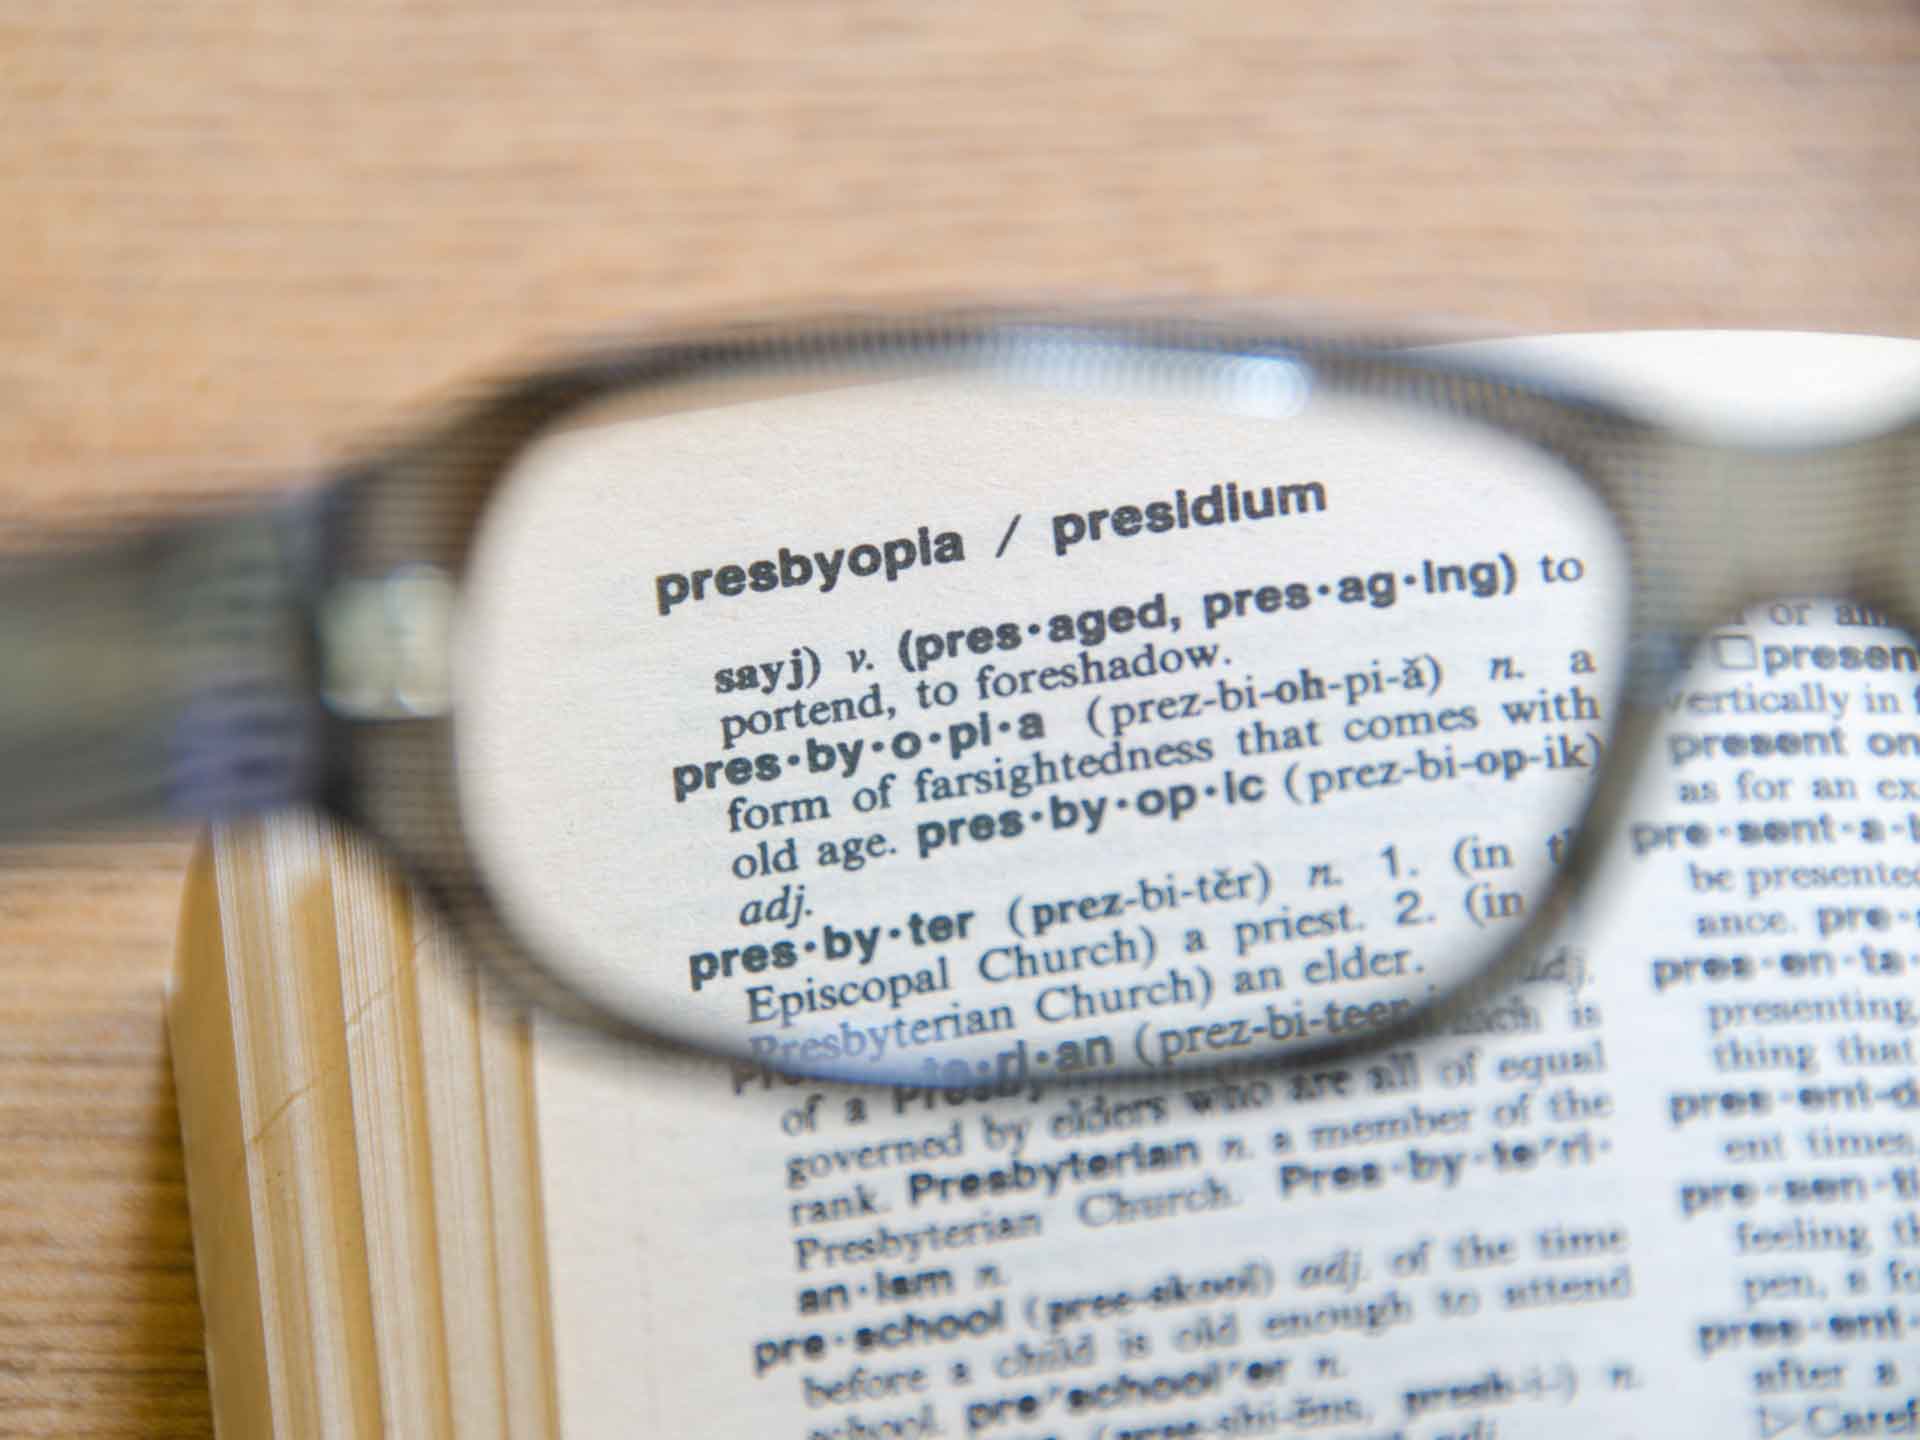 Vision over 40 (Presbyopia)